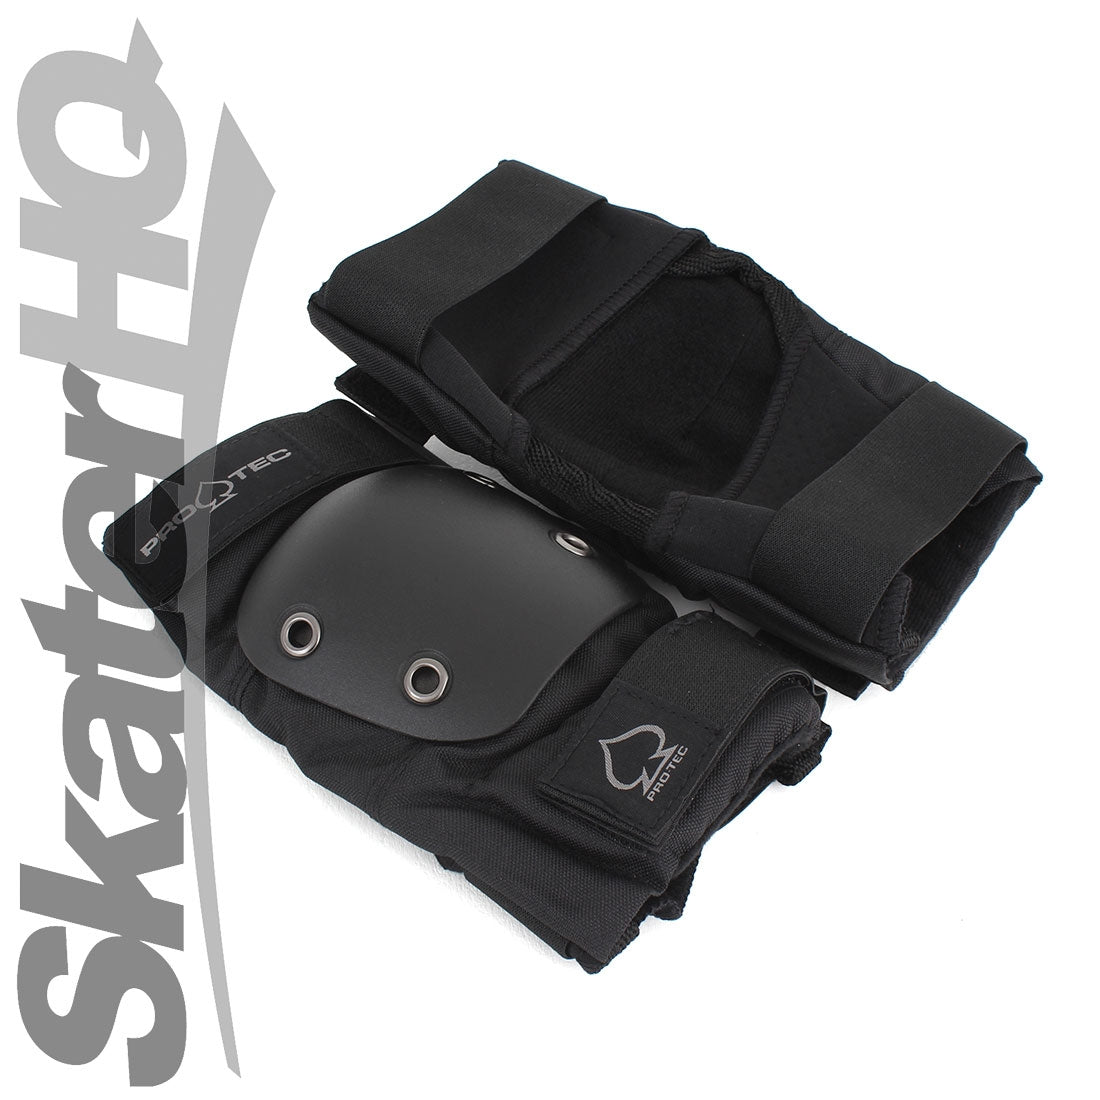 Pro-Tec Street Knee/Elbow Pad Set - Black Protective Gear